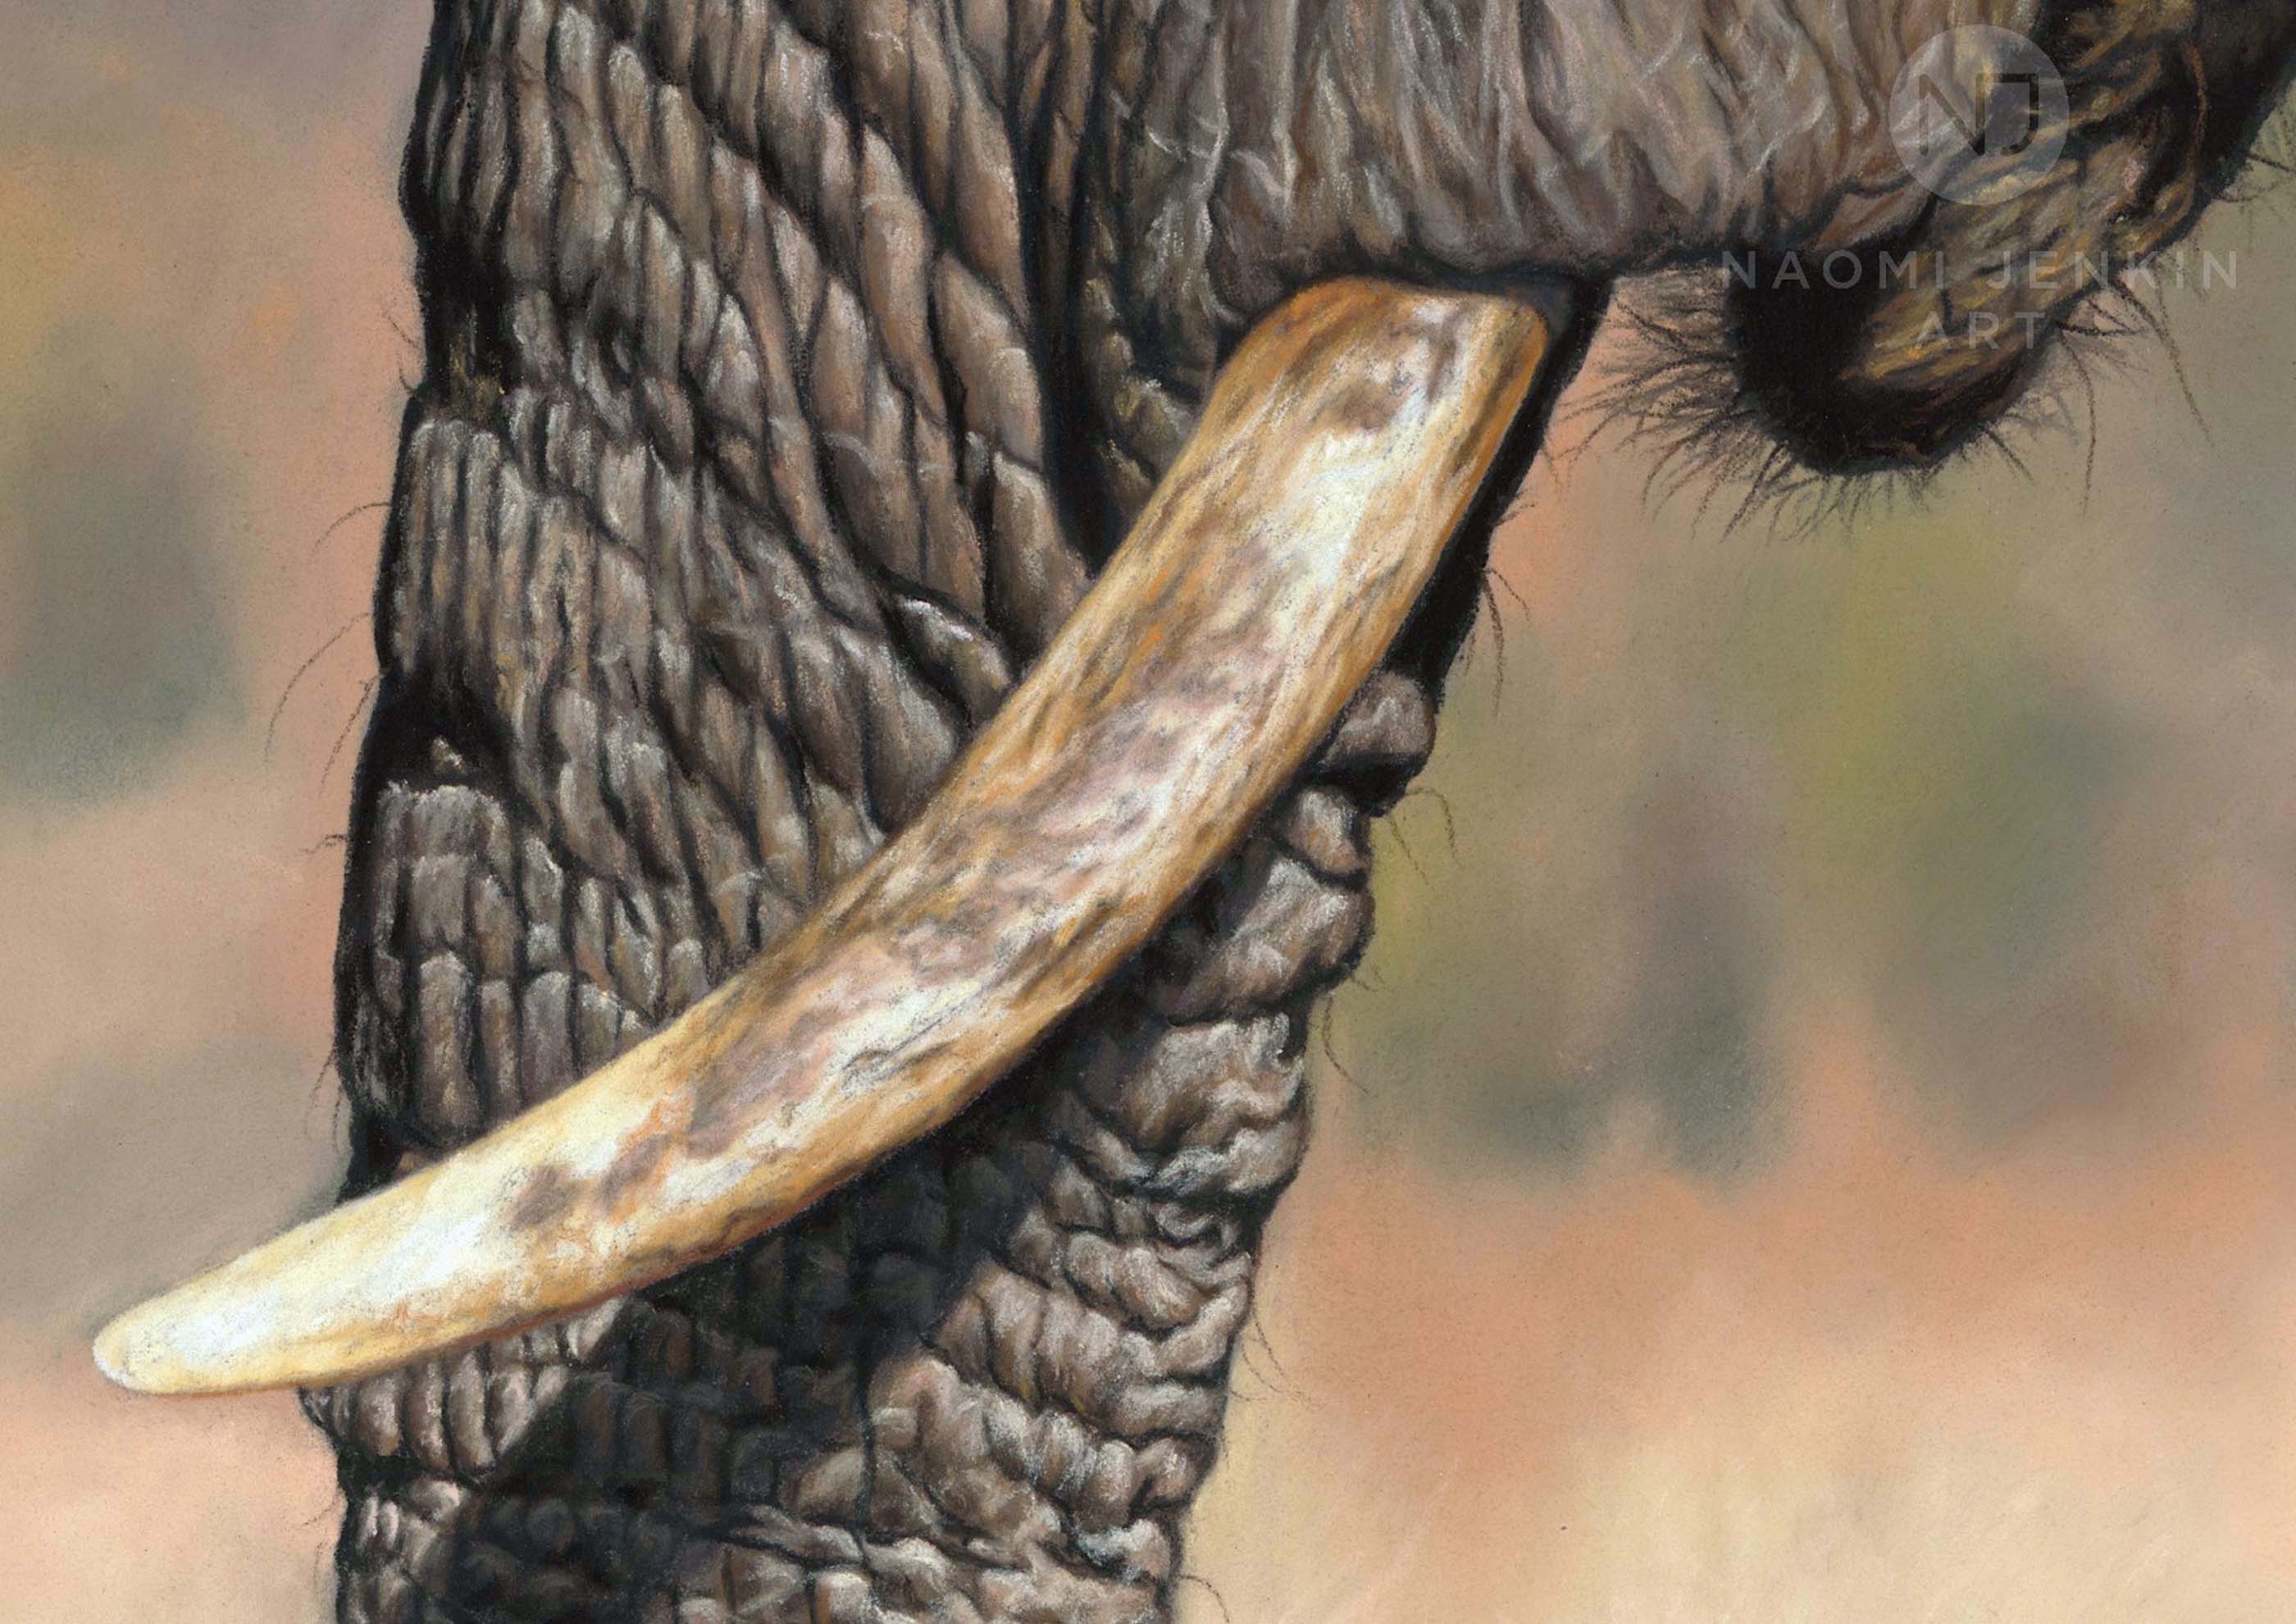 Close up of elephant drawing by  British wildlife artist Naomi Jenkin.